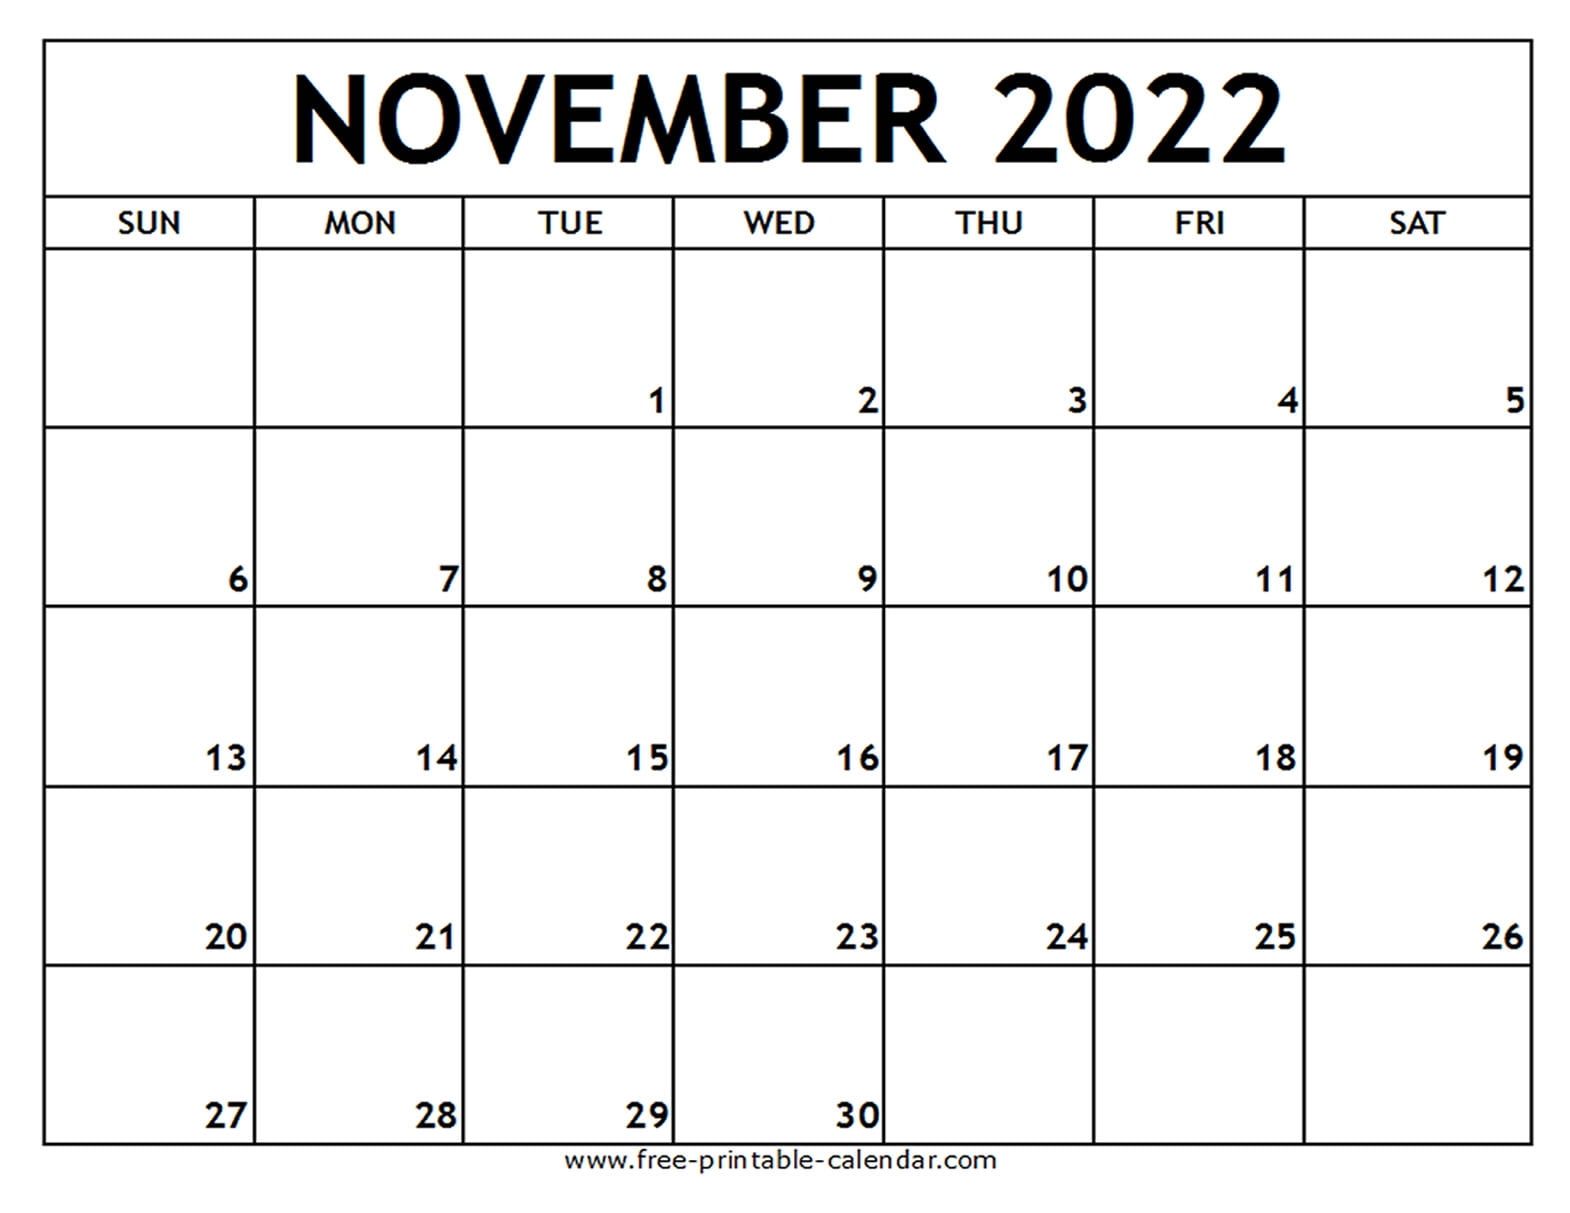 November 2022 Printable Calendar Free printable calendar